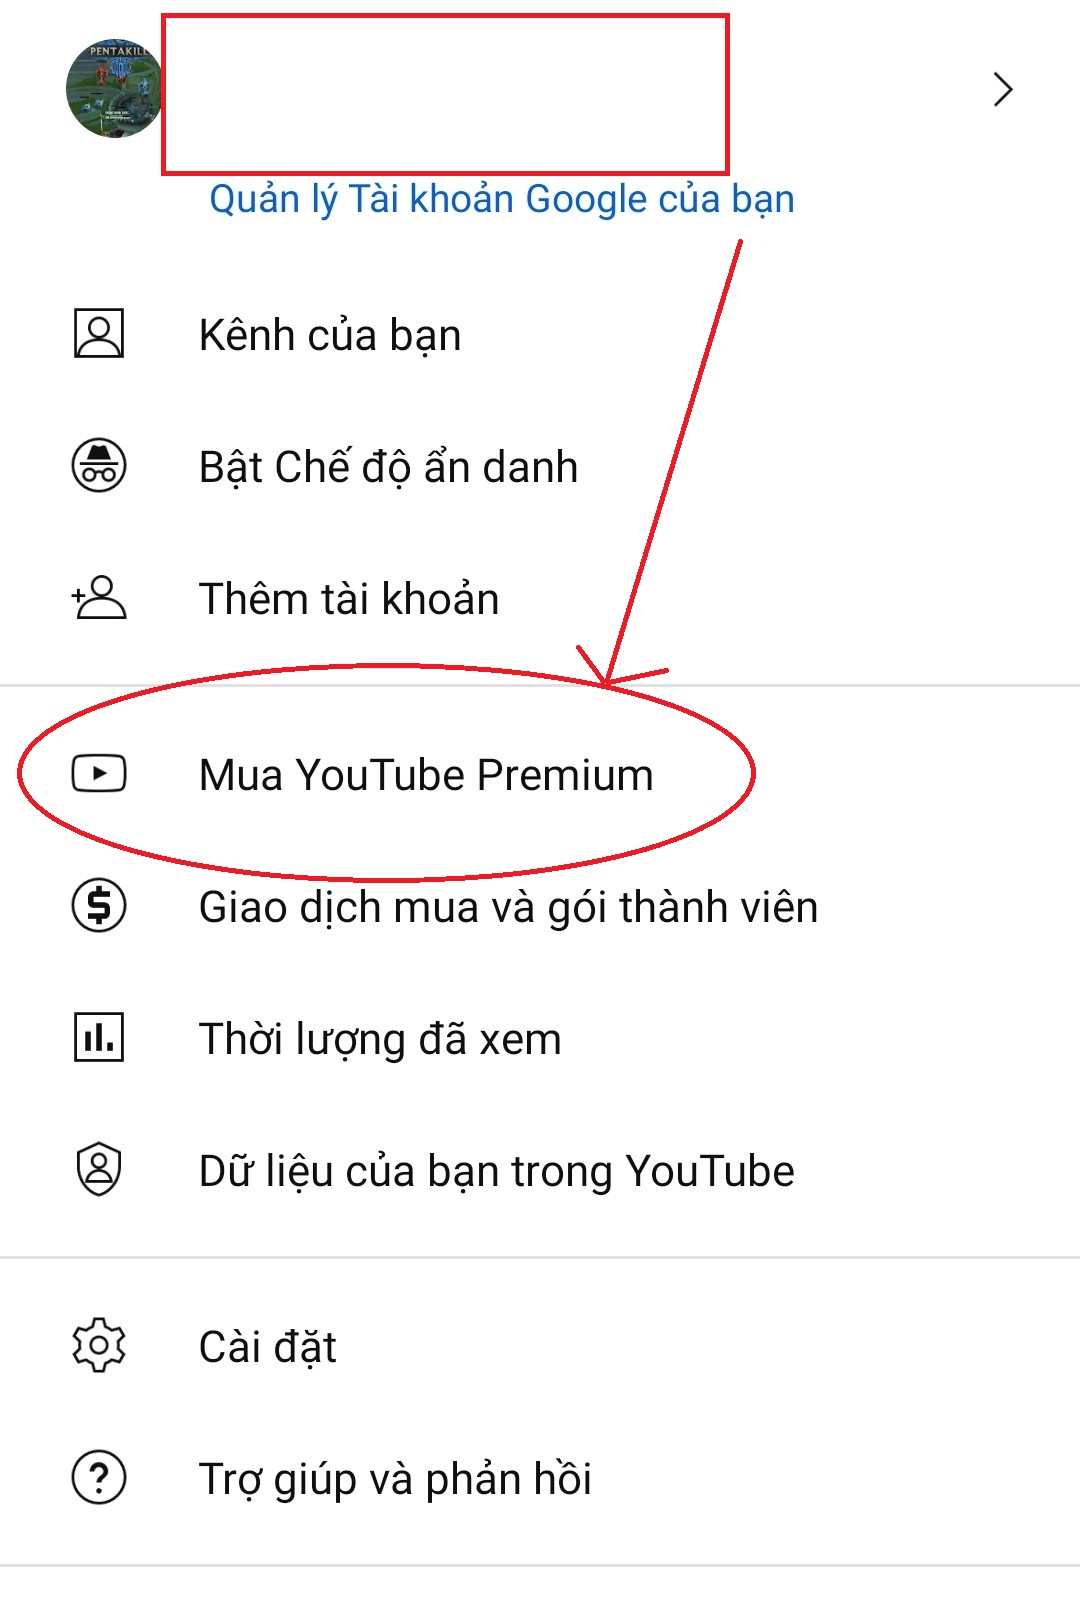 Chọn vào mua Youtube Premium